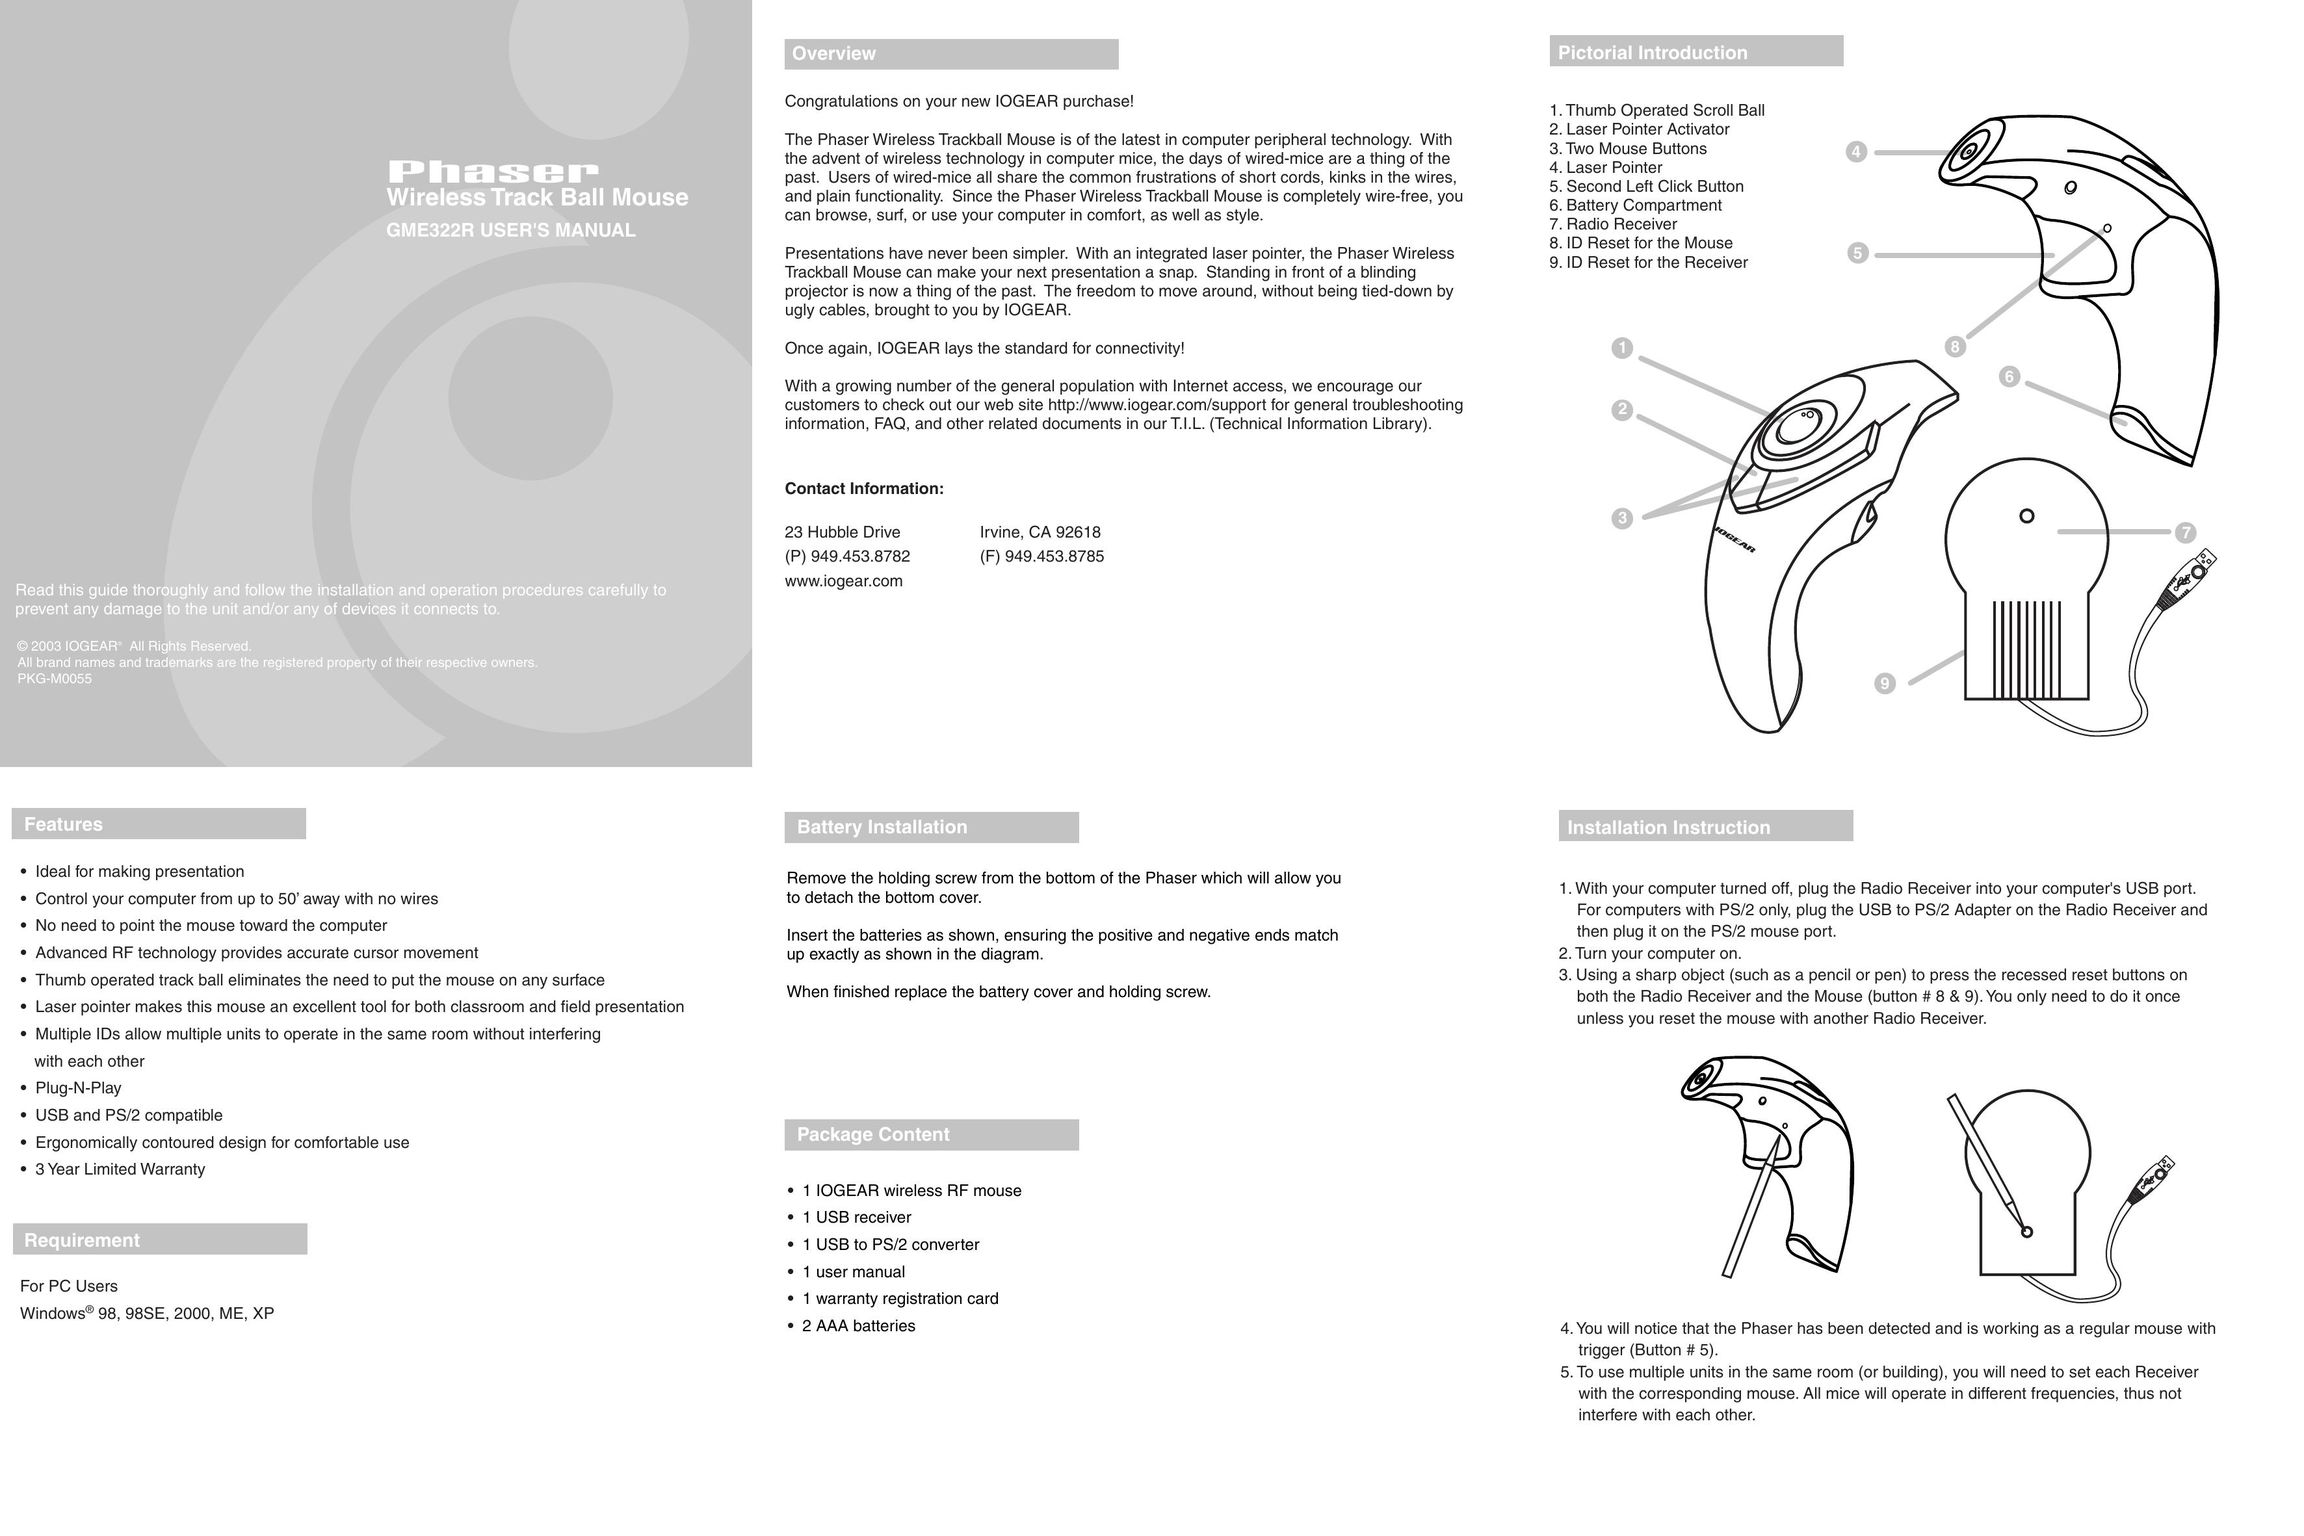 IOGear GME322R Mouse User Manual